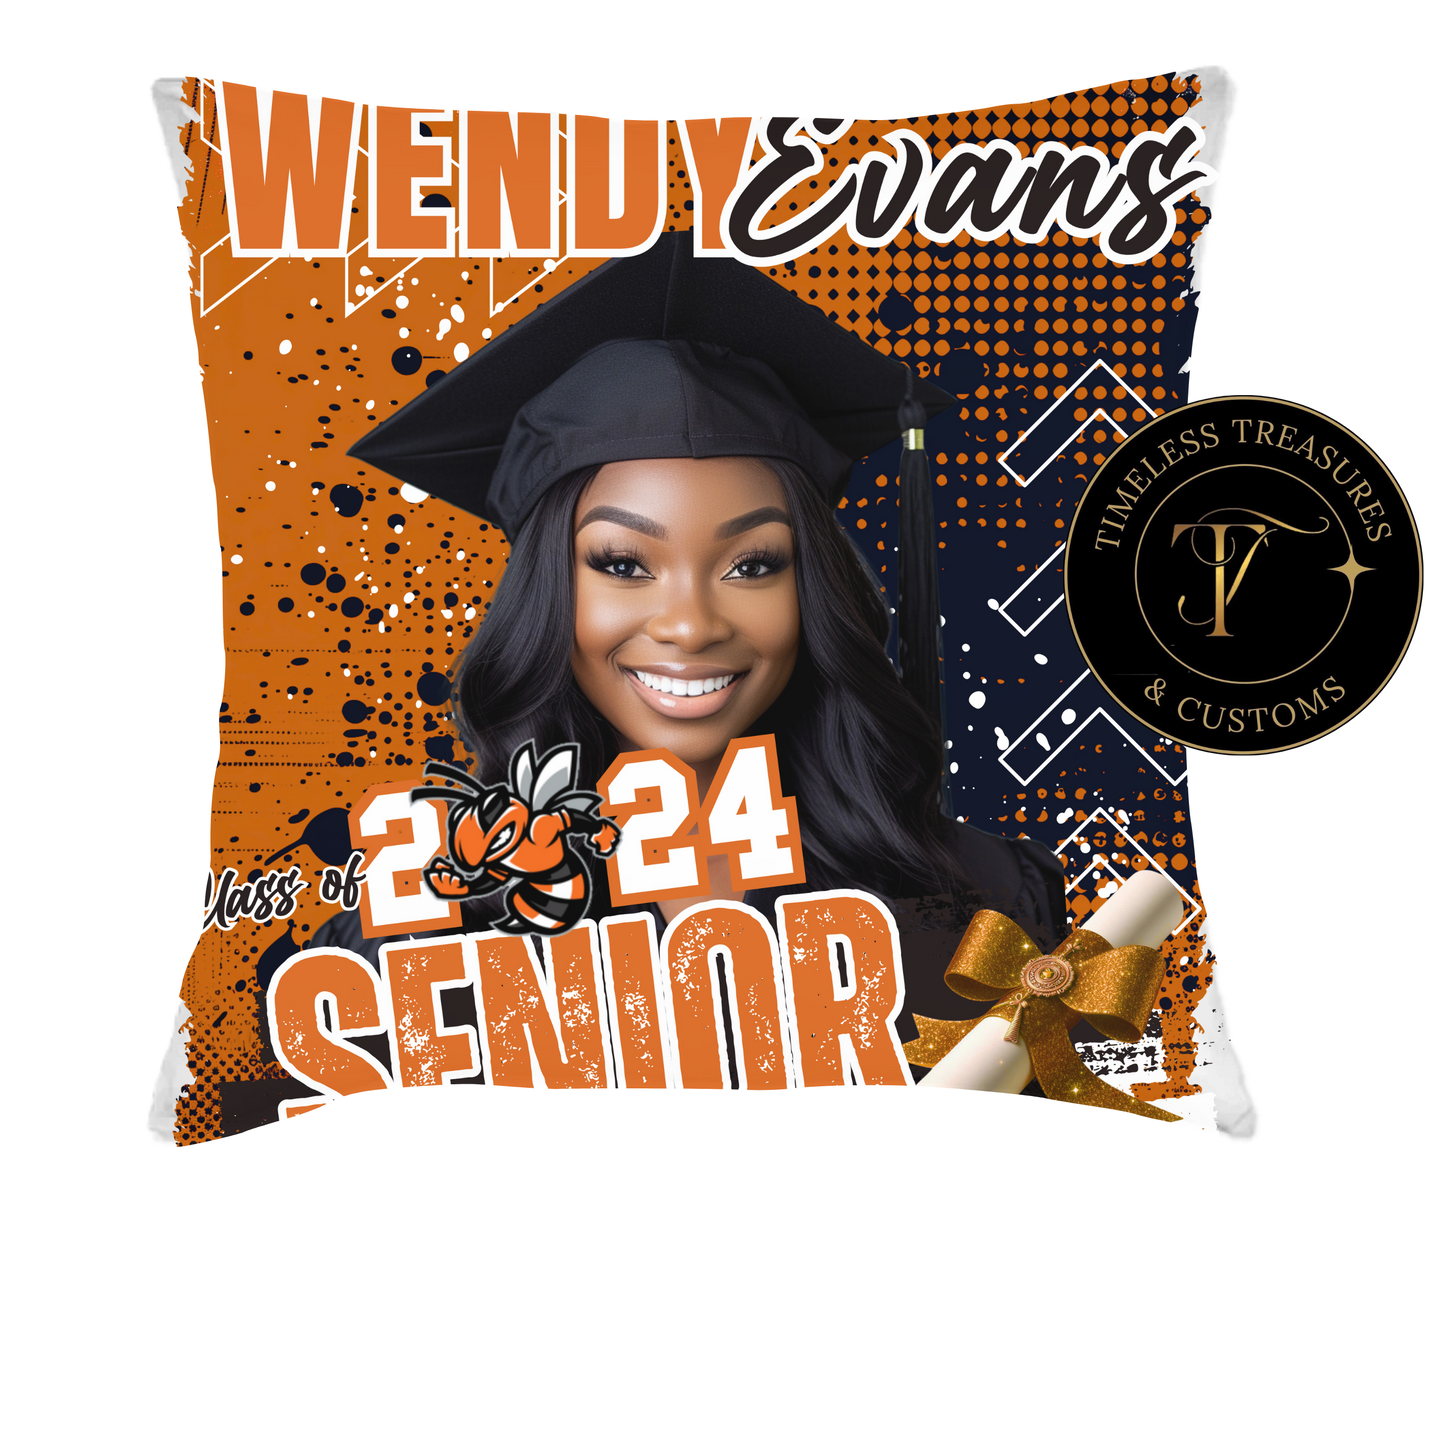 Graduate Personalized Photo Pillow